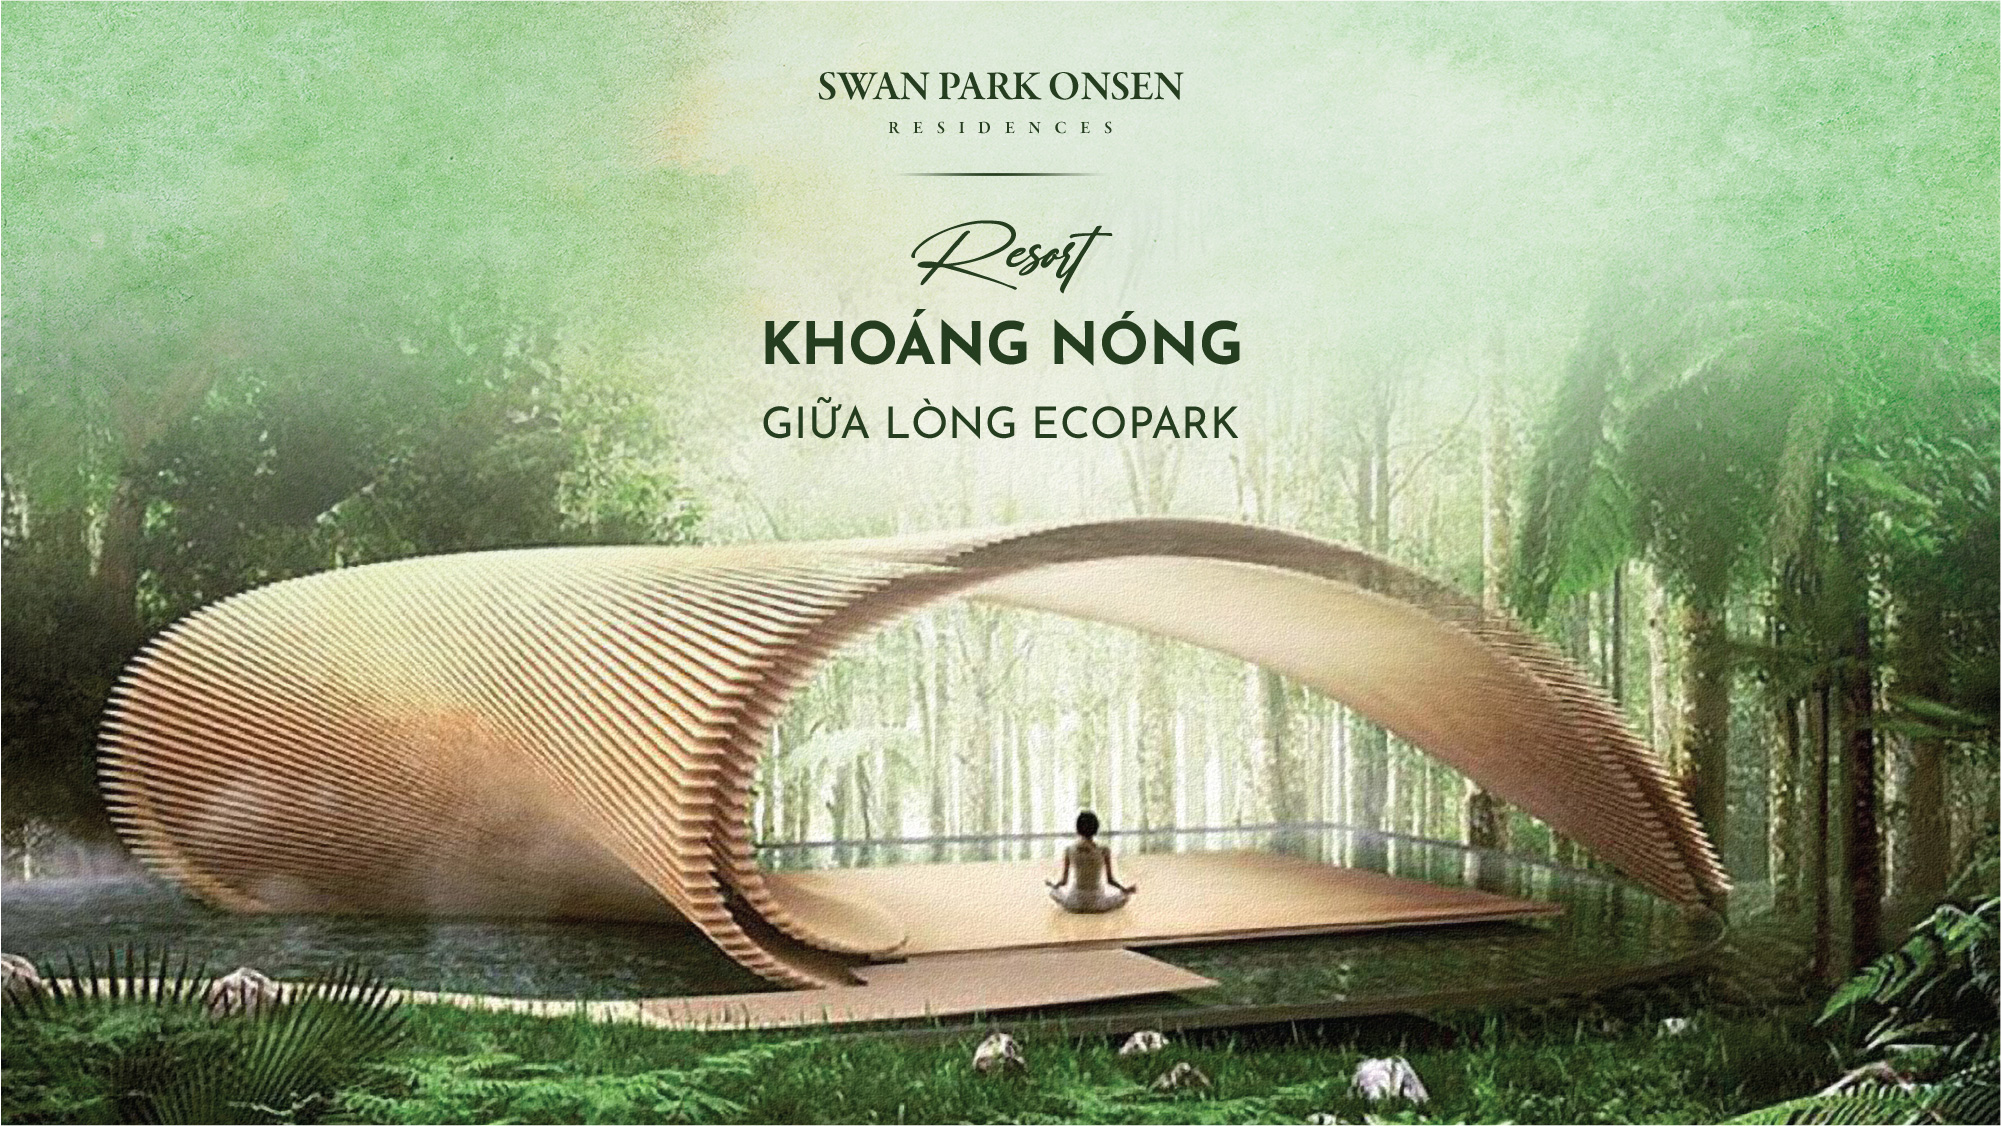 Chung cư khoáng nóng Swan Park Onsen Residences Ecopark